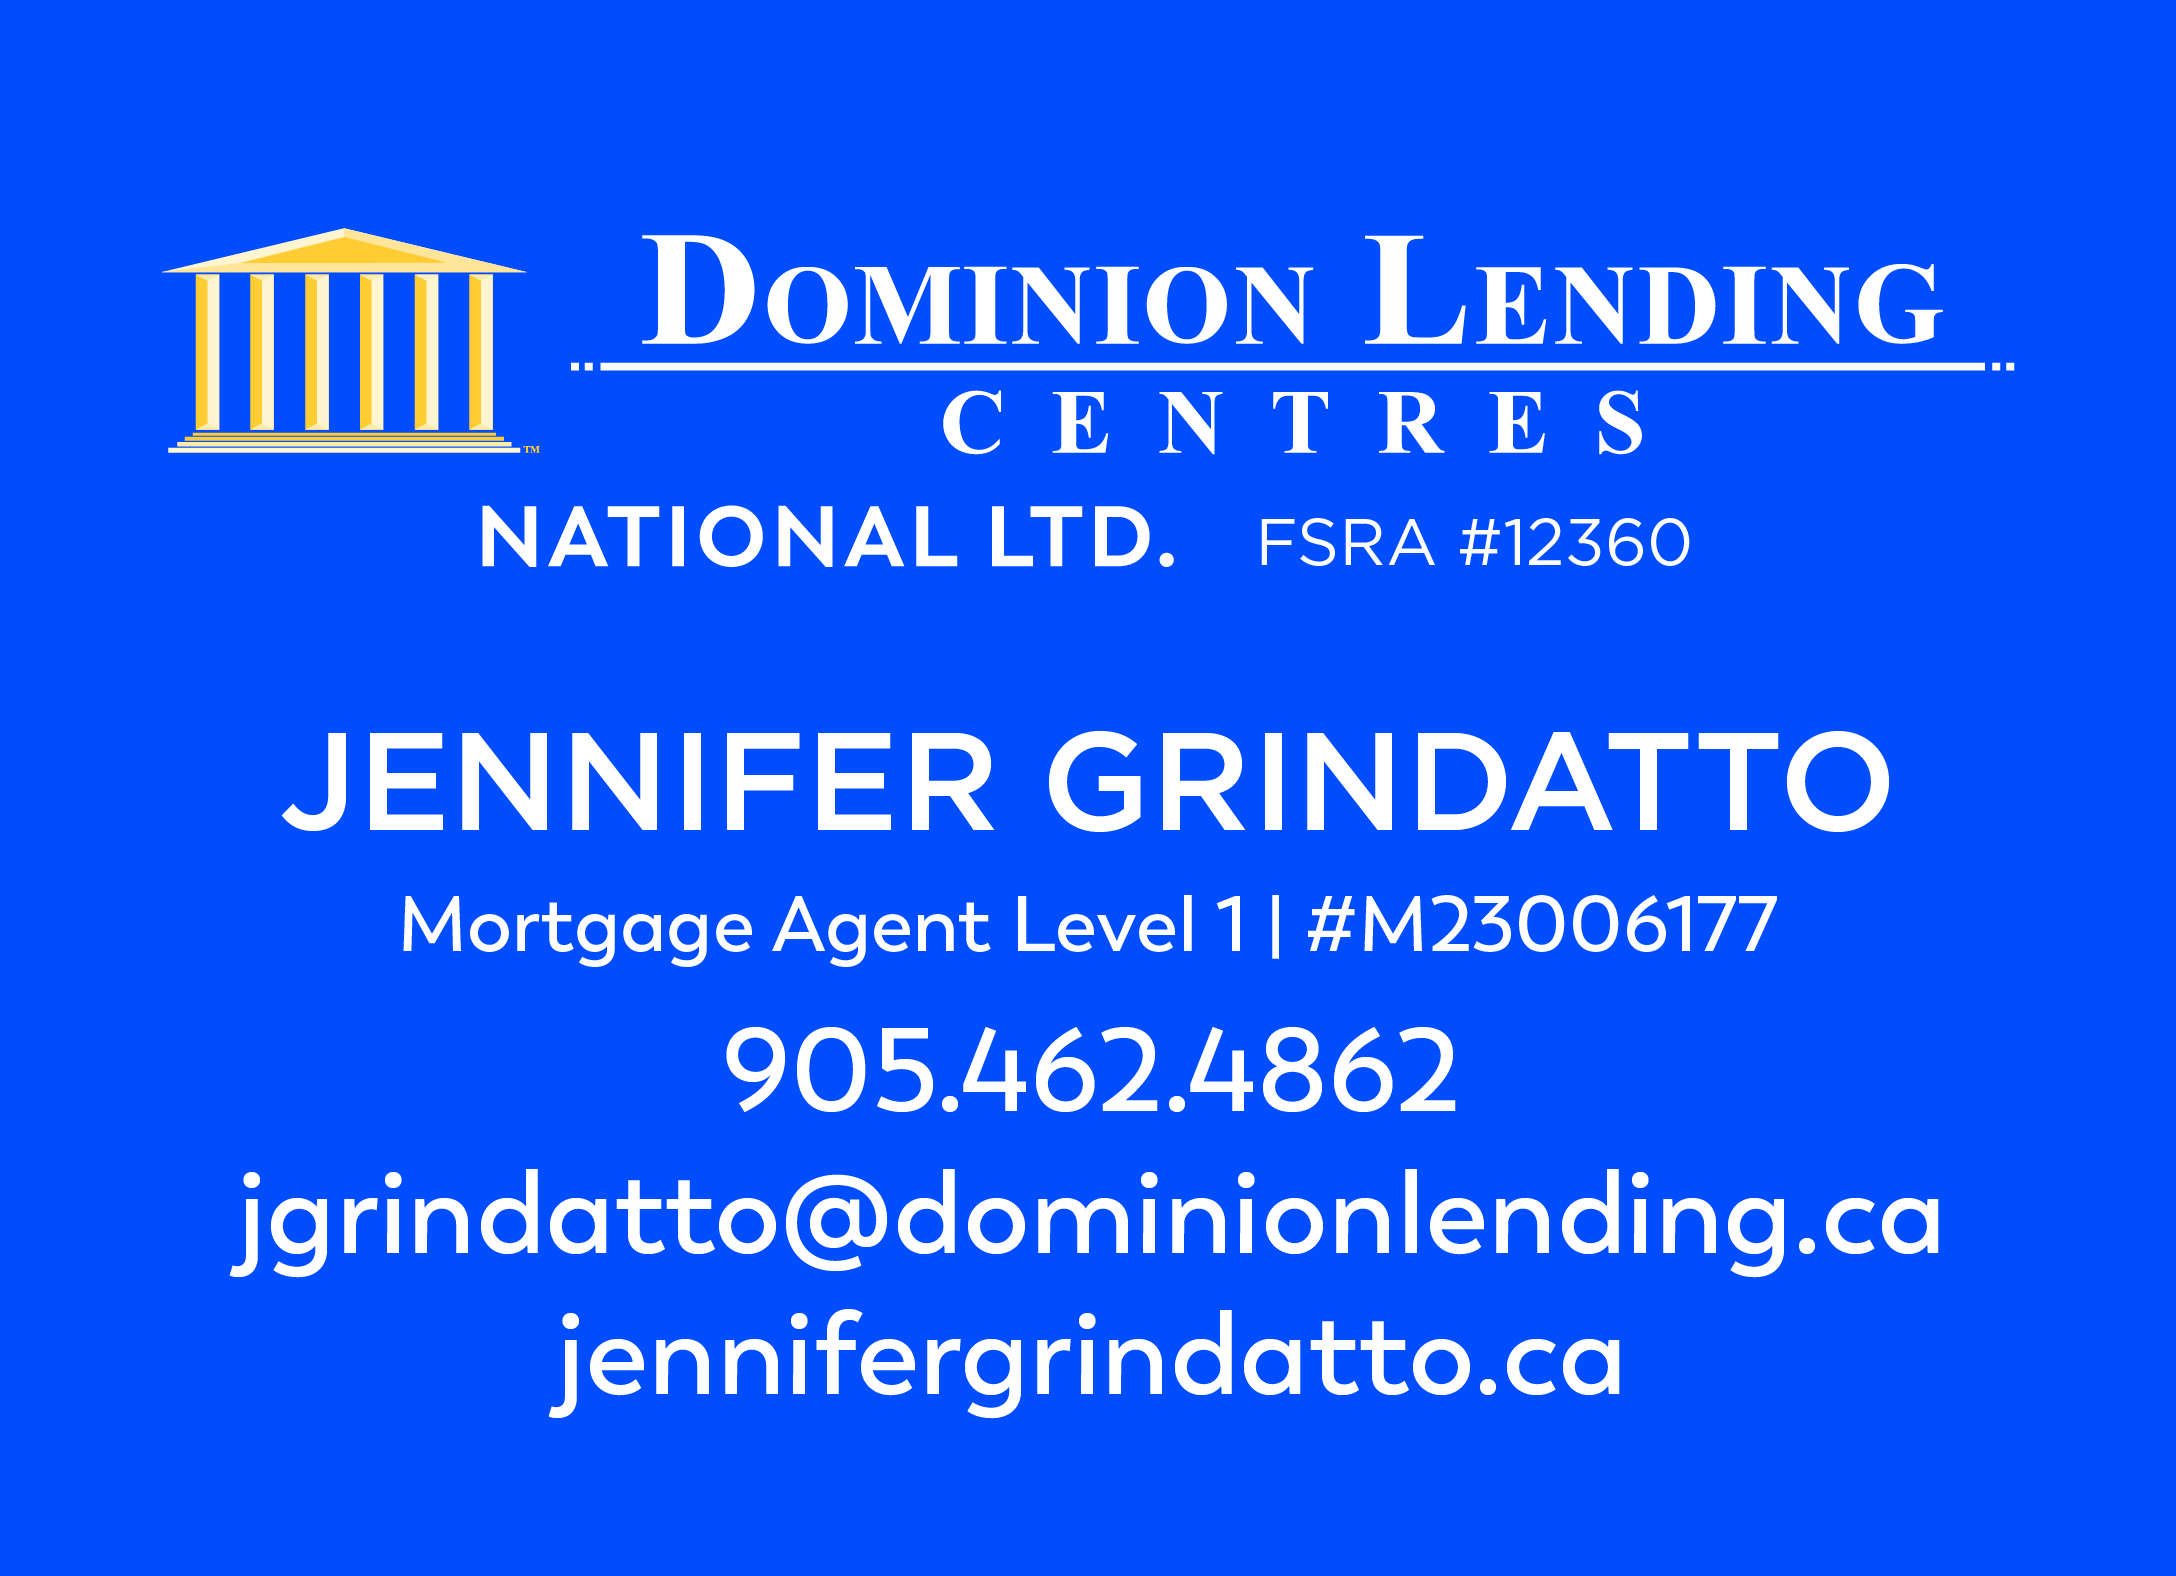 Dominion Lending Centres National Ltd